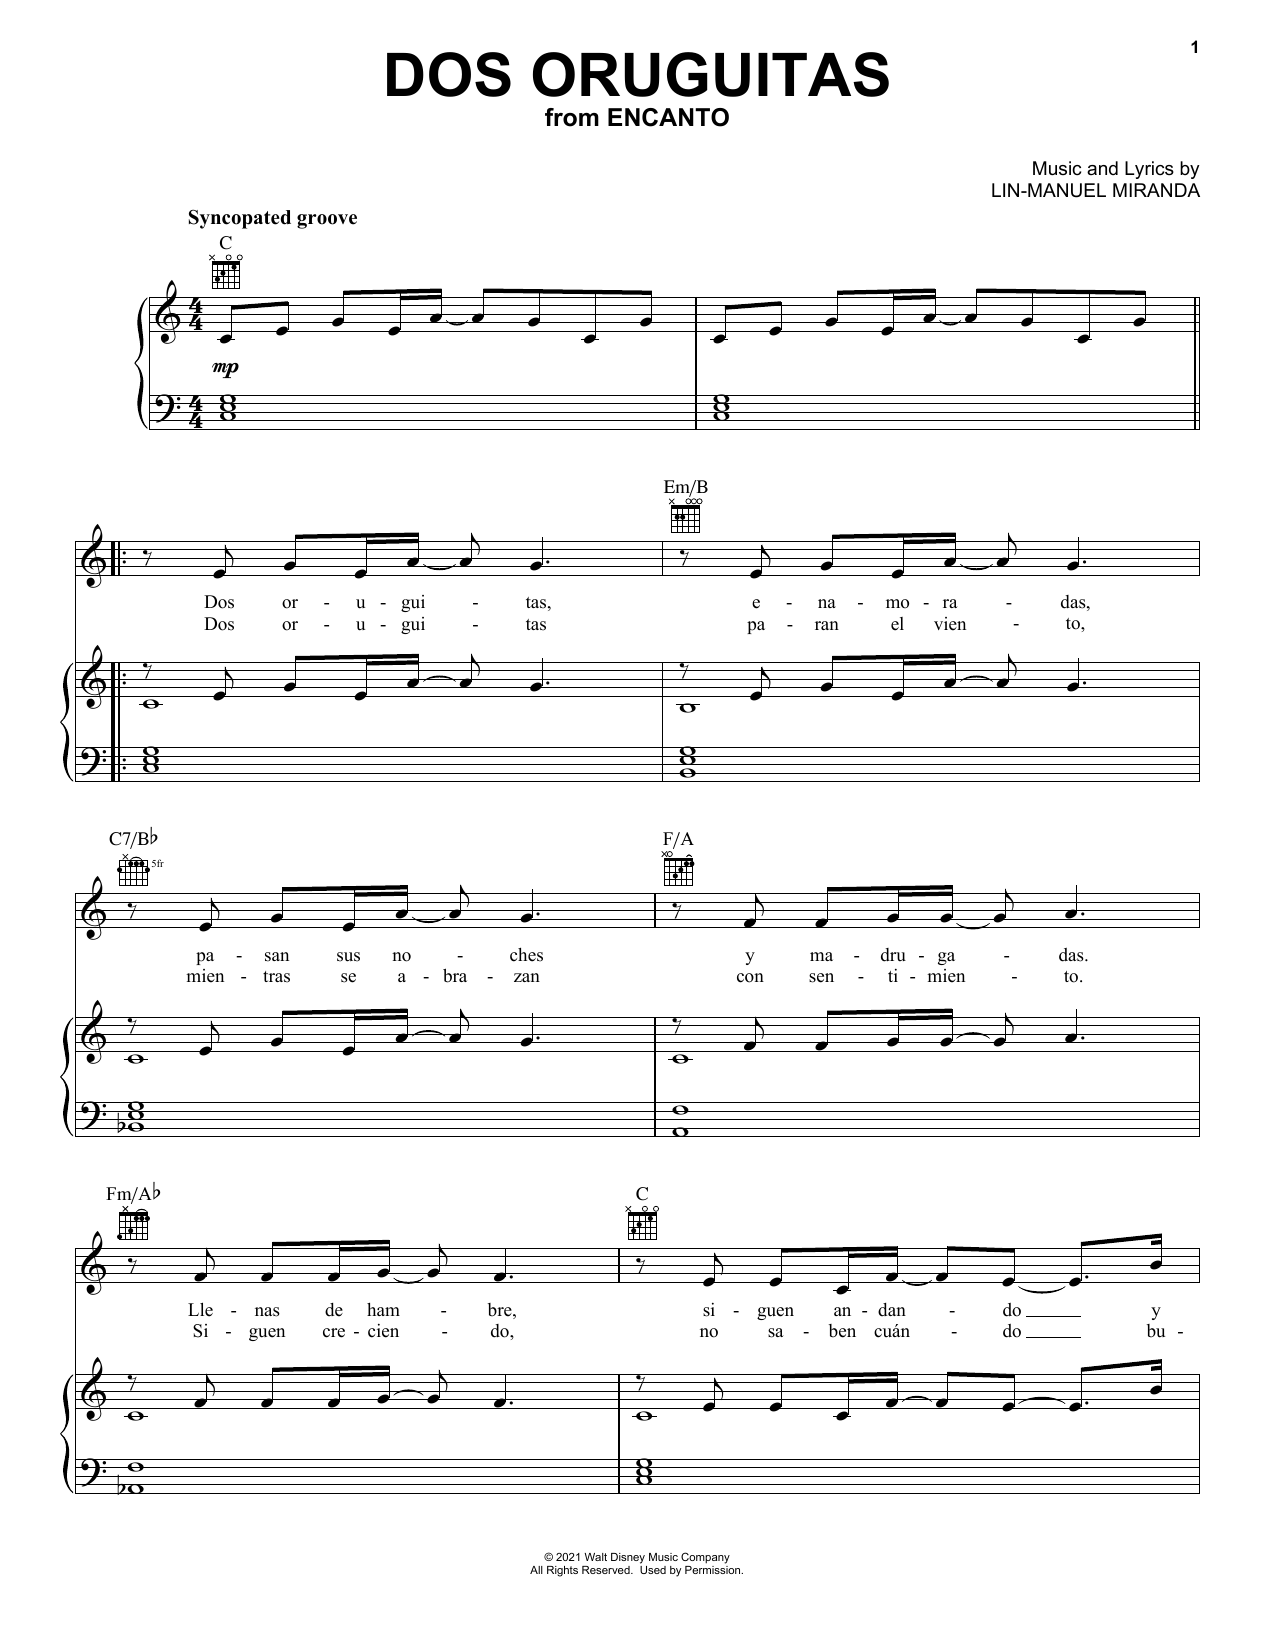 Lin-Manuel Miranda Dos Oruguitas (from Encanto) Sheet Music Notes & Chords for Trombone Solo - Download or Print PDF